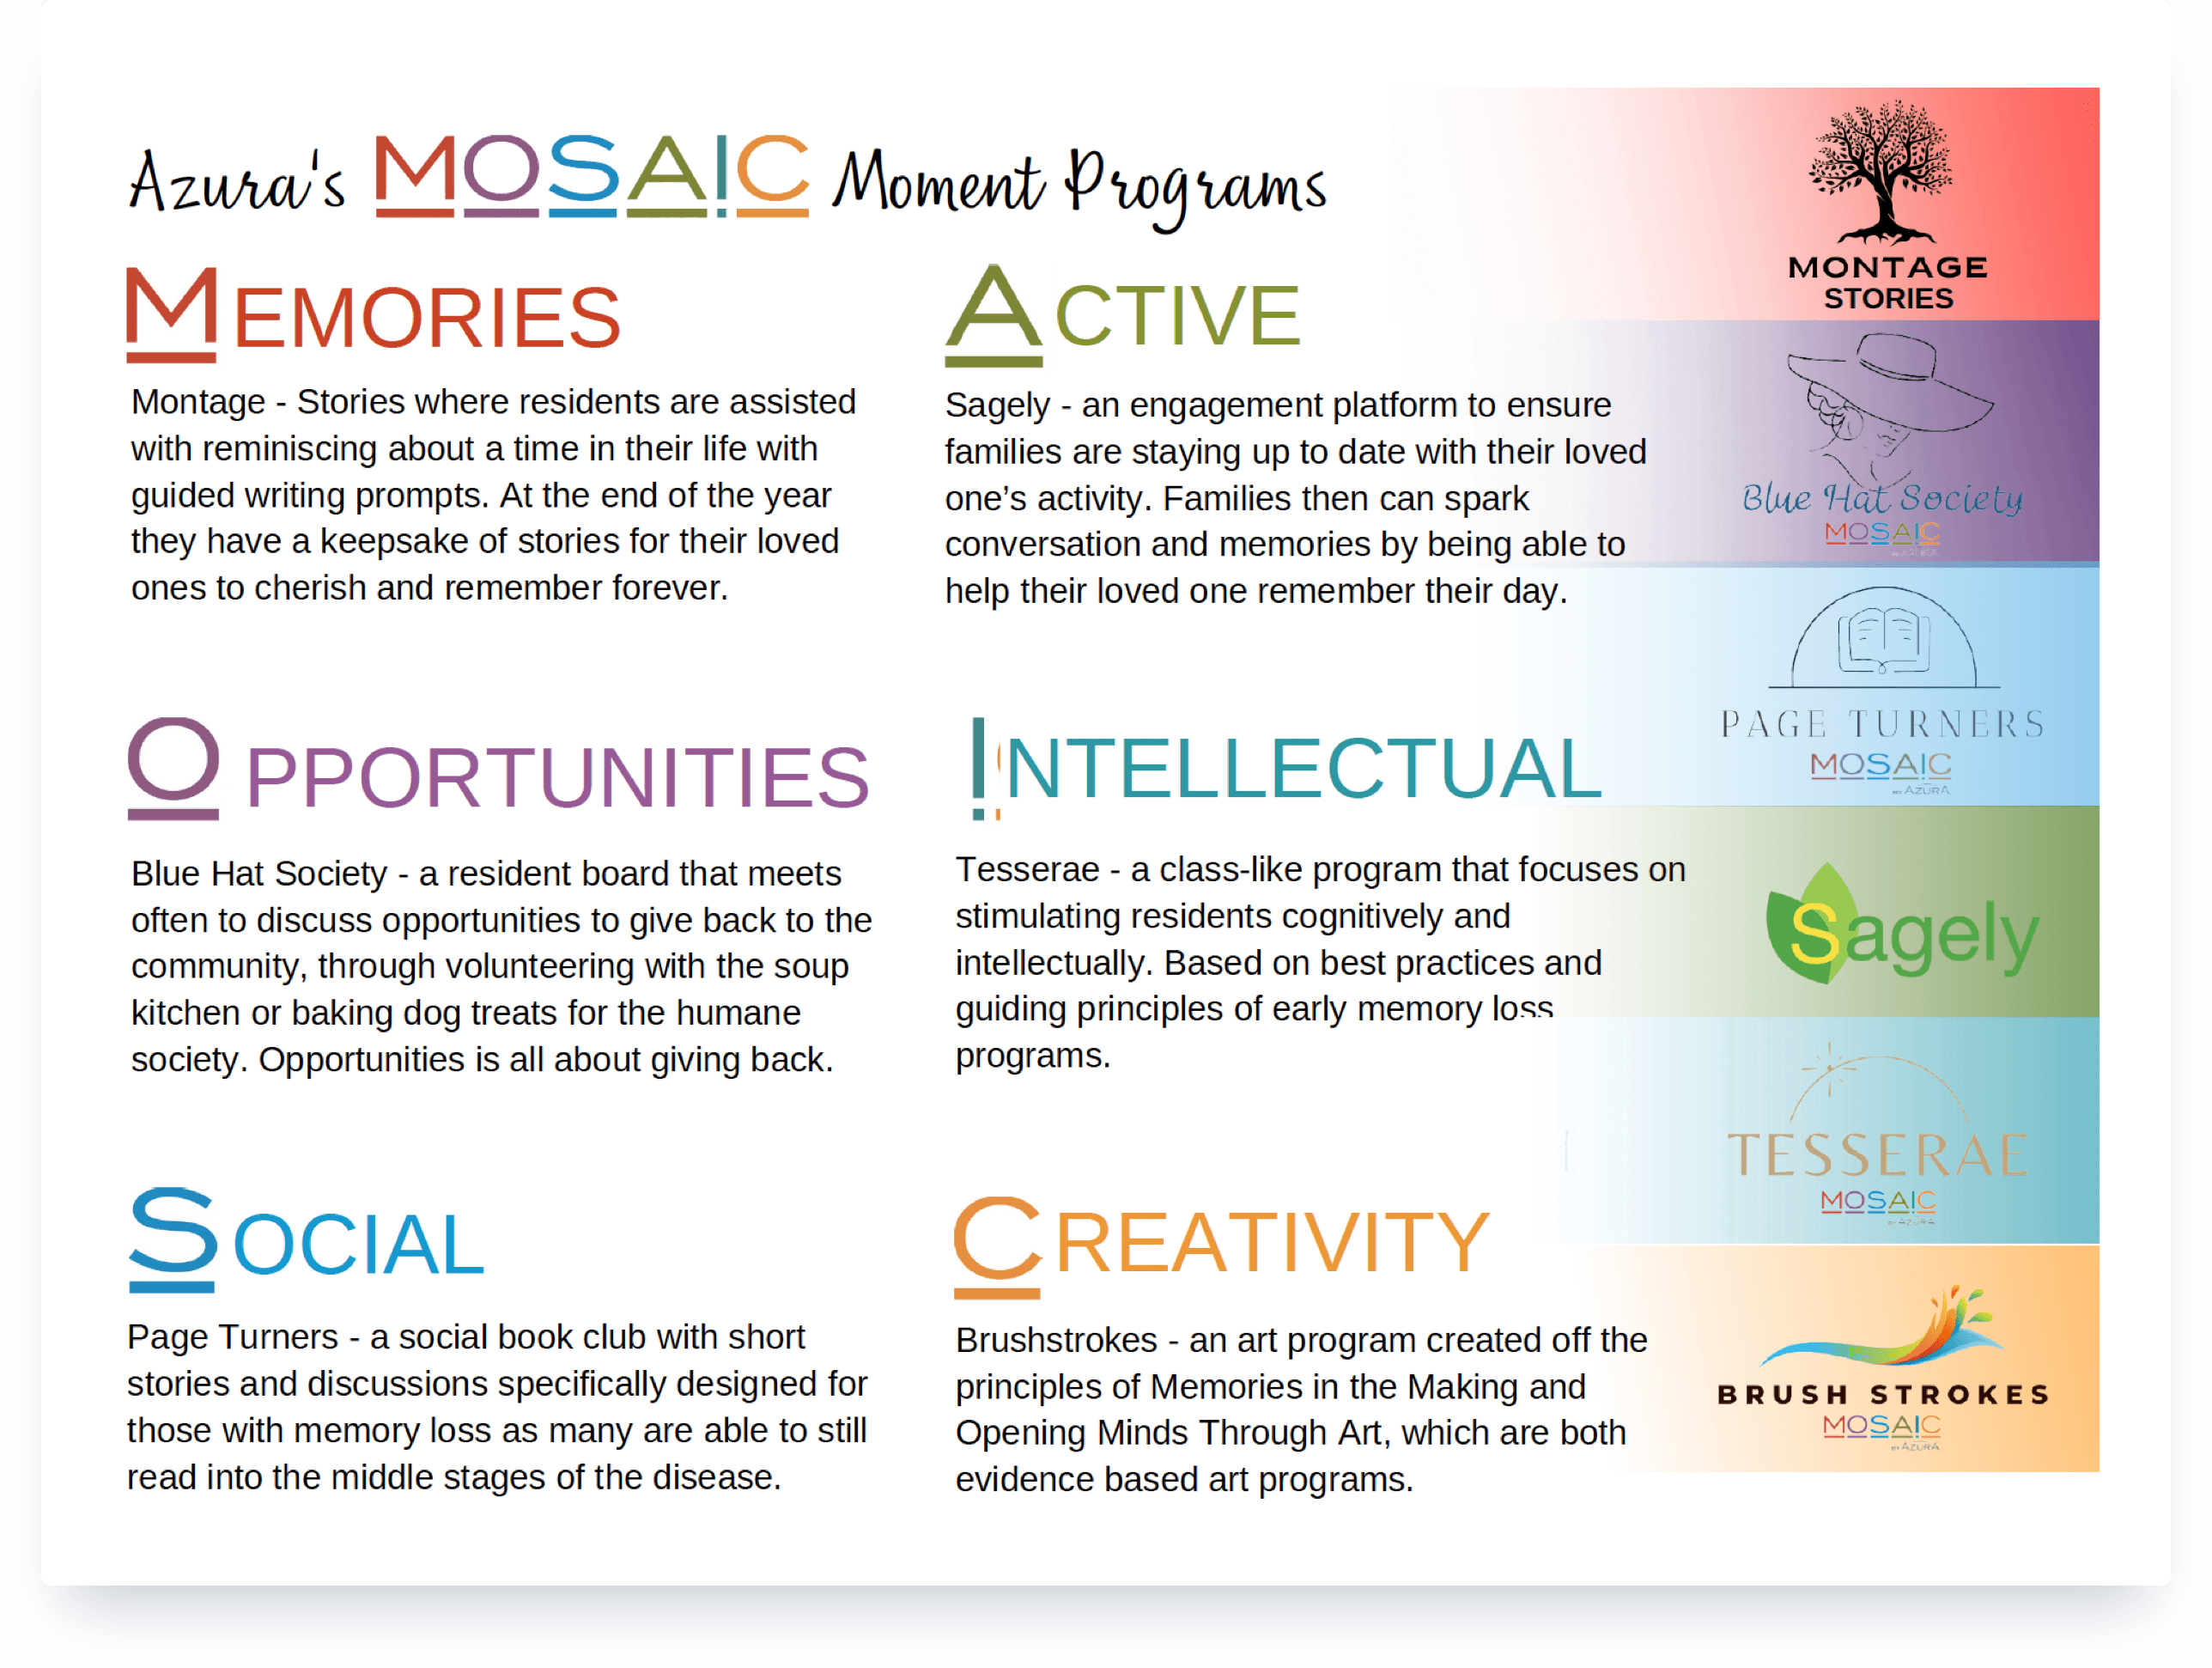 Azuras Mosaic moment programs